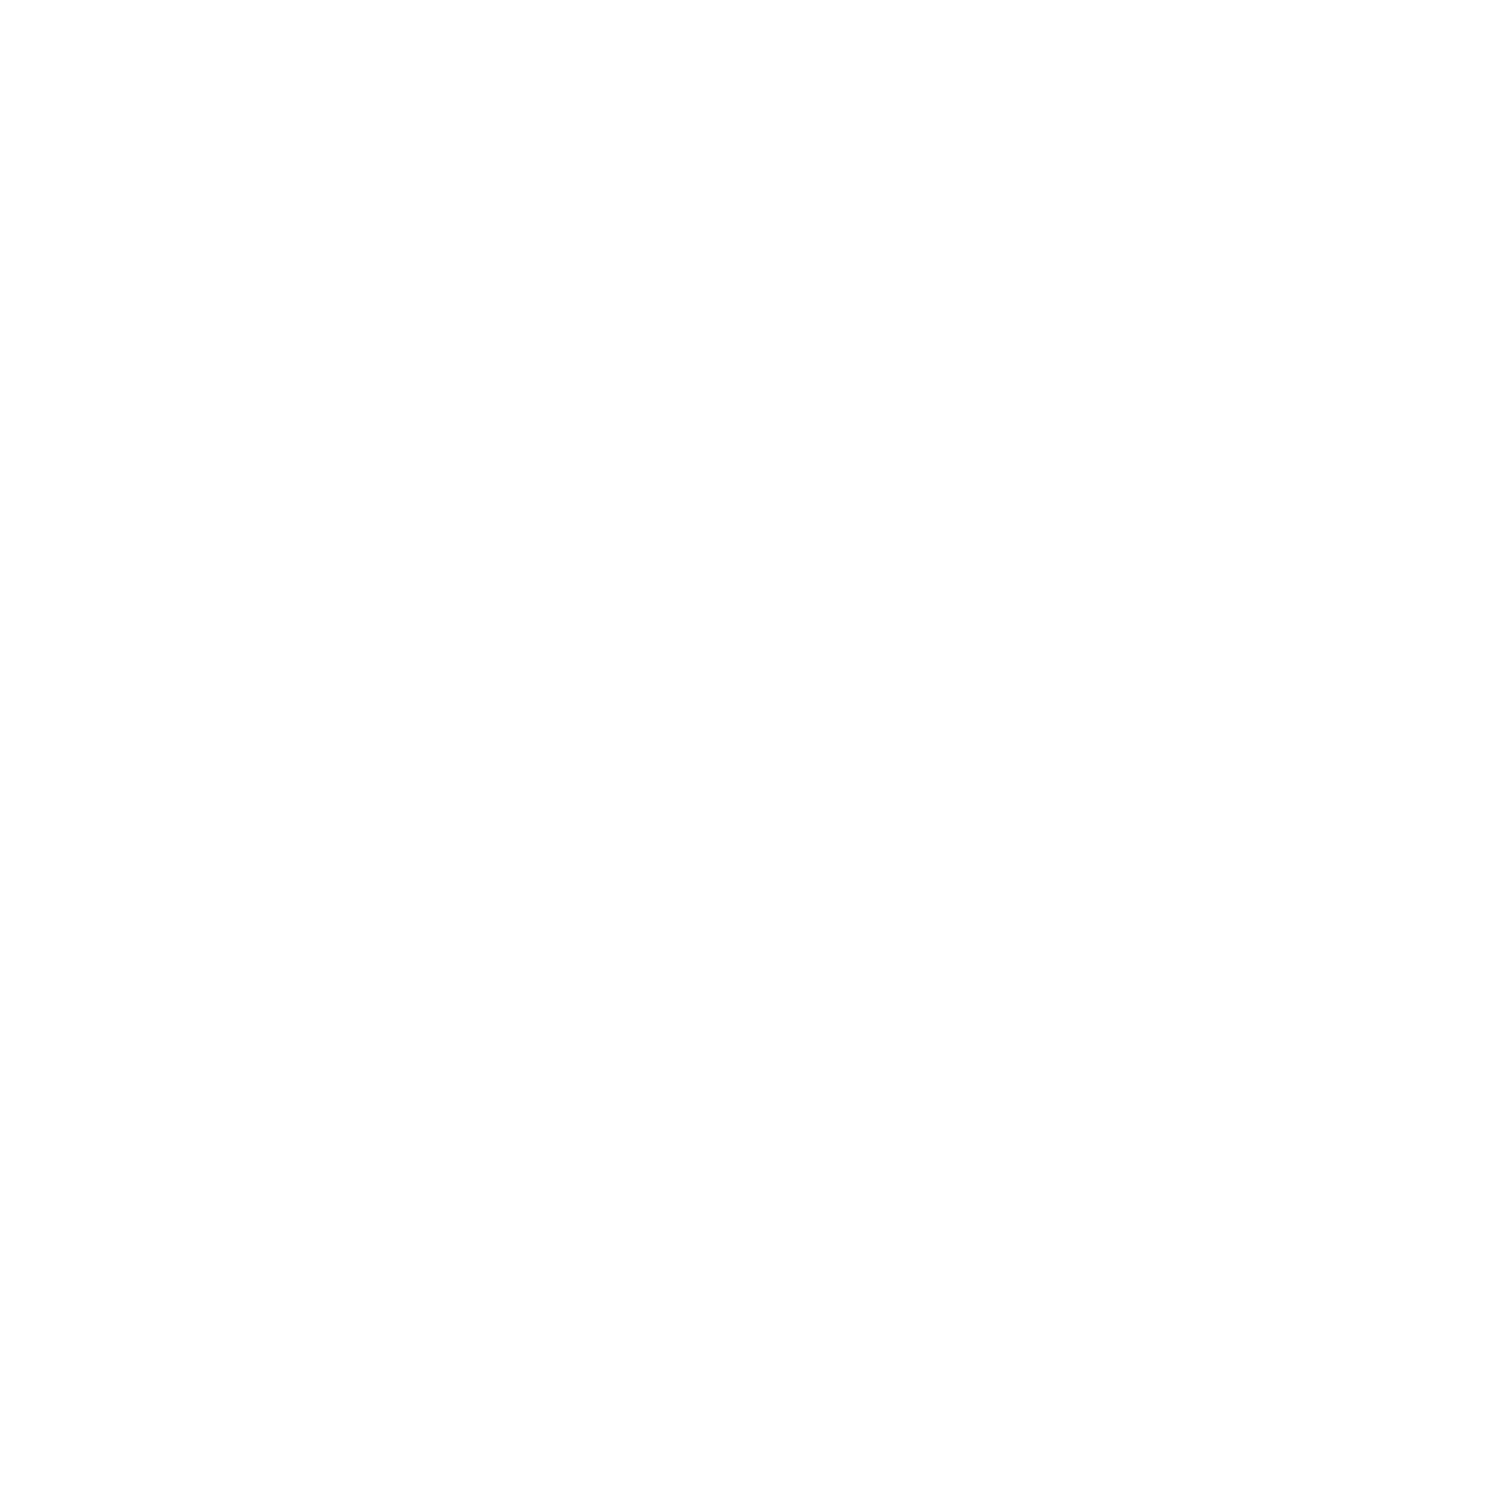 Royal Bank of Scotland logo pour fonds sombres (PNG transparent)